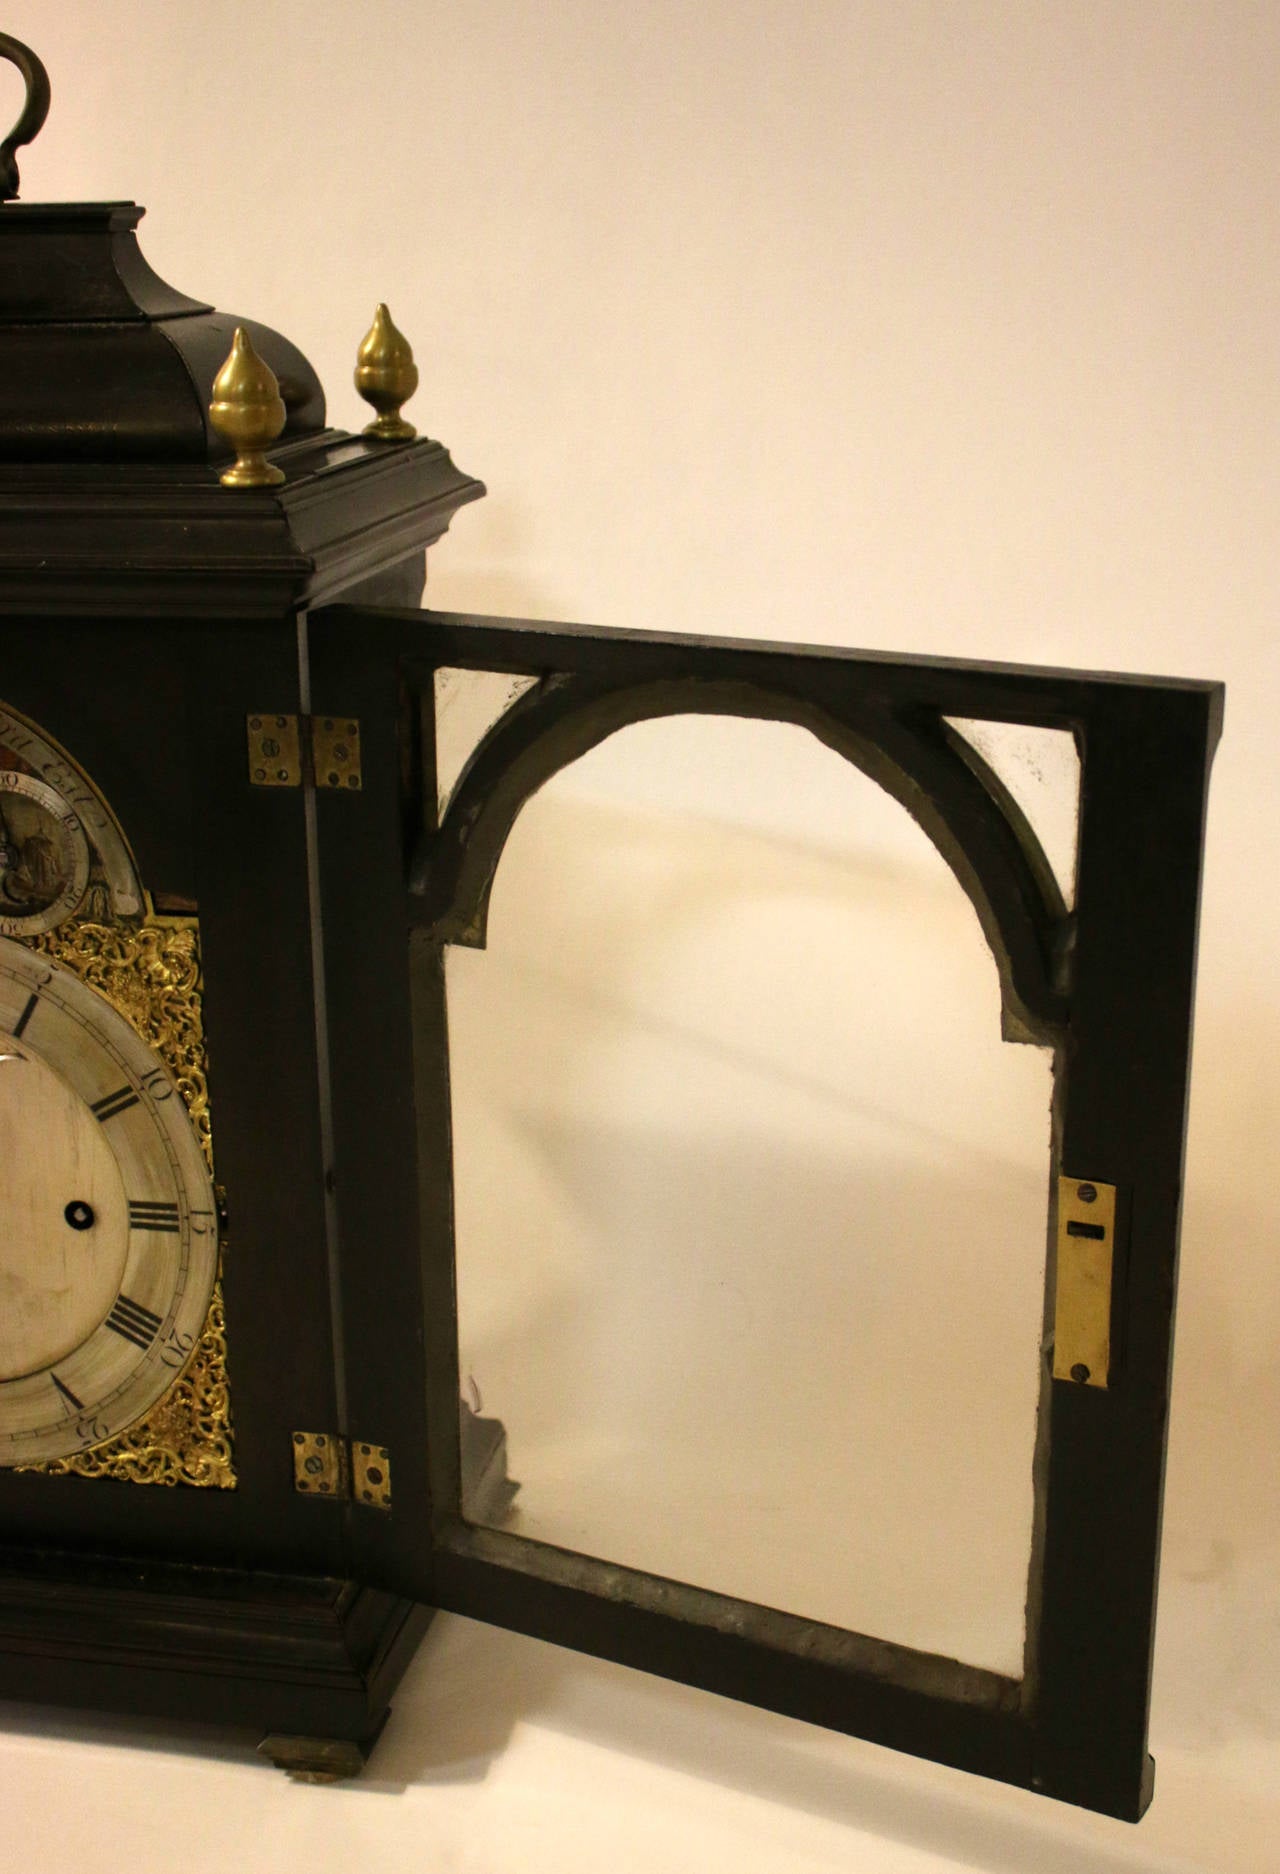 18th century bracket clocks